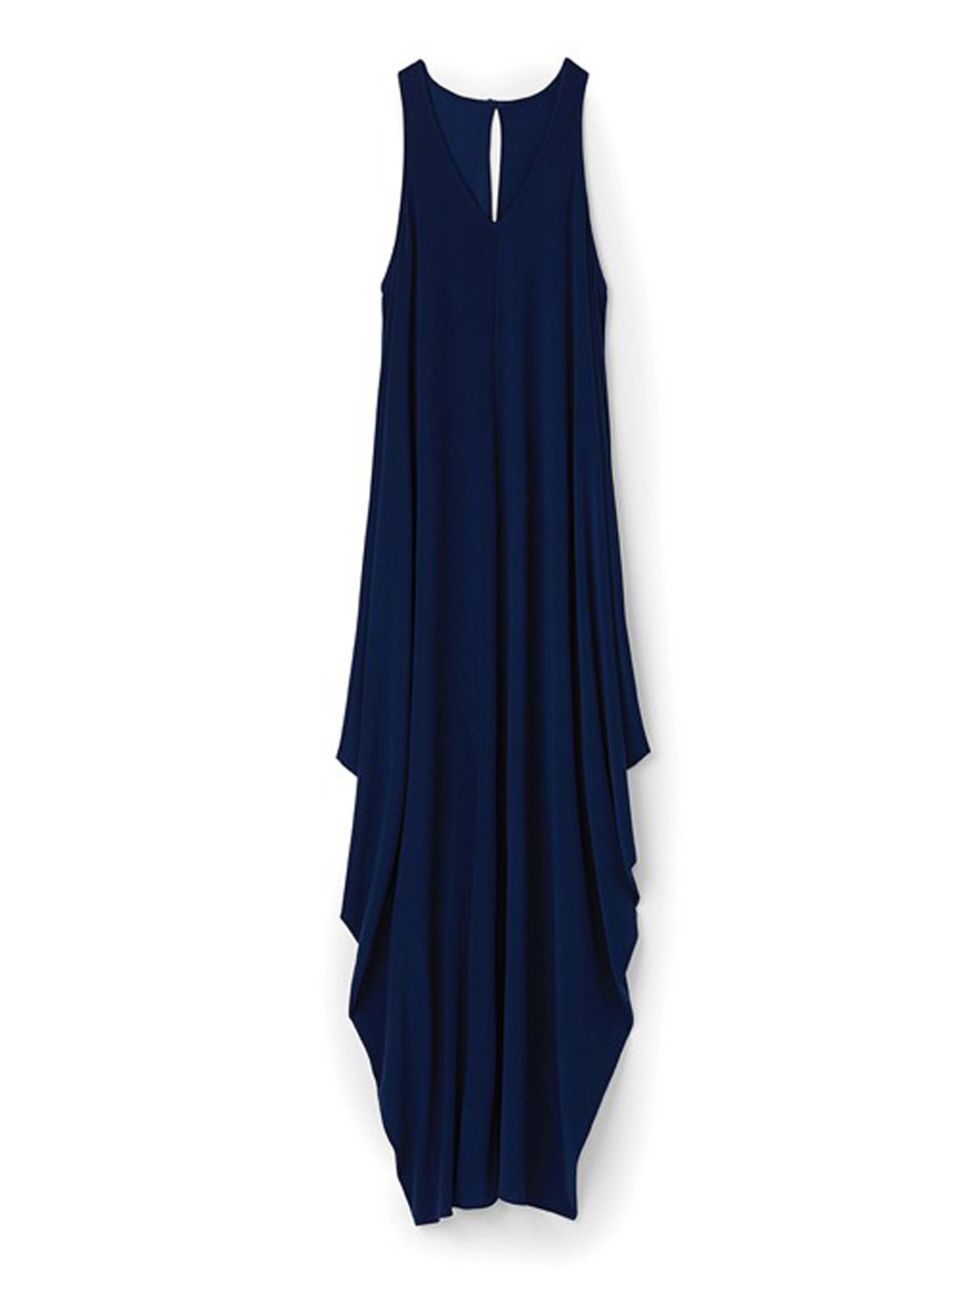 Blue, Dress, One-piece garment, Electric blue, Black, Cobalt blue, Day dress, Sleeveless shirt, Costume, Fashion design, 